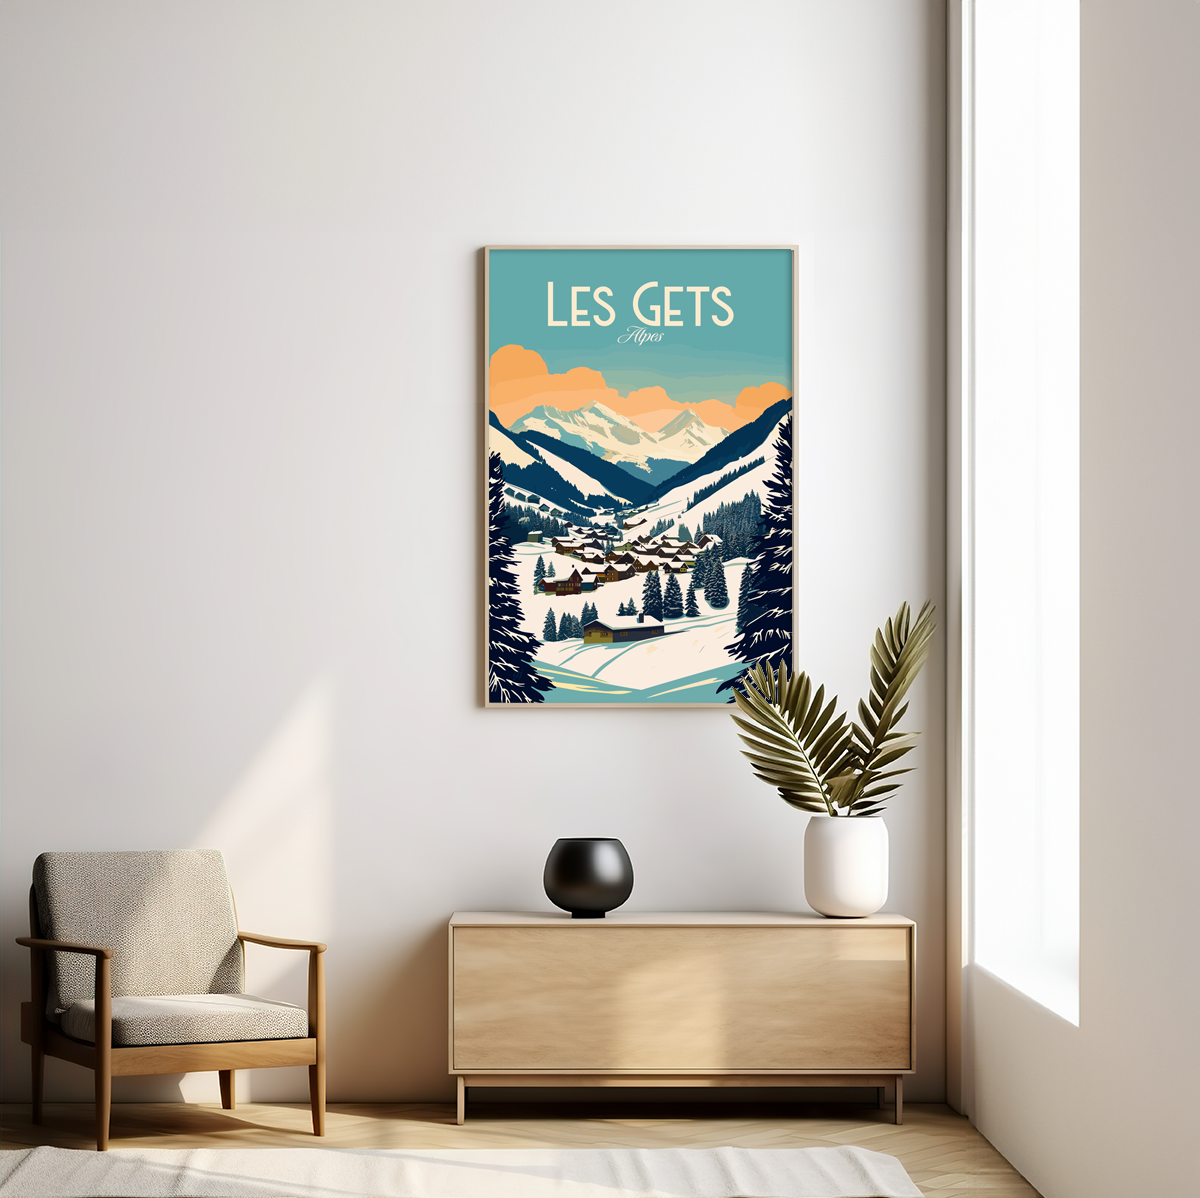 Les Gets poster by bon voyage design